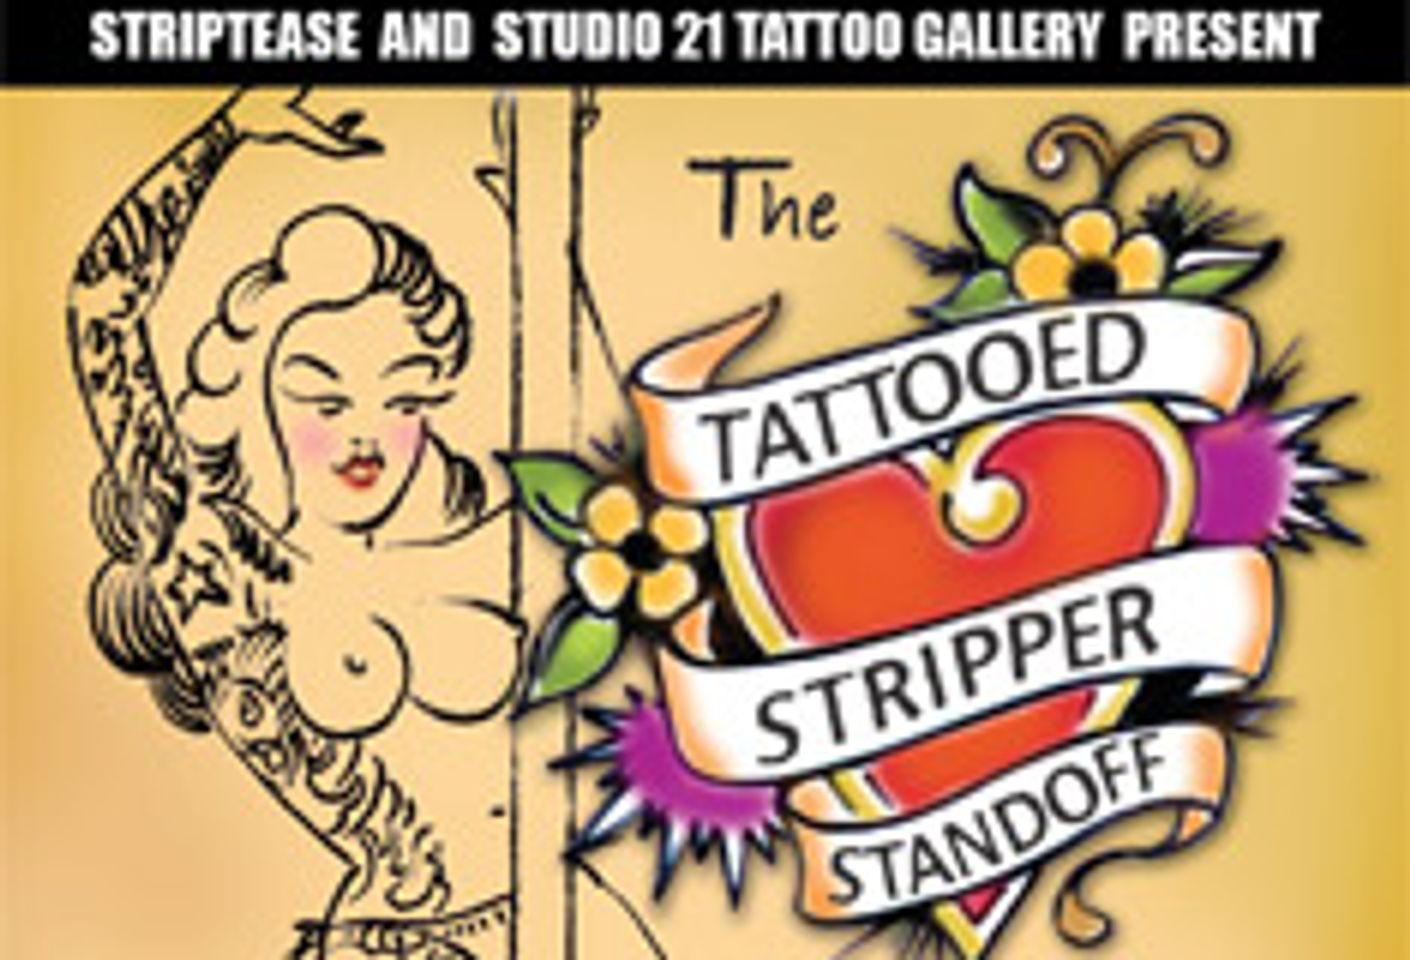 Tattooed Stripper Standoff this Weekend